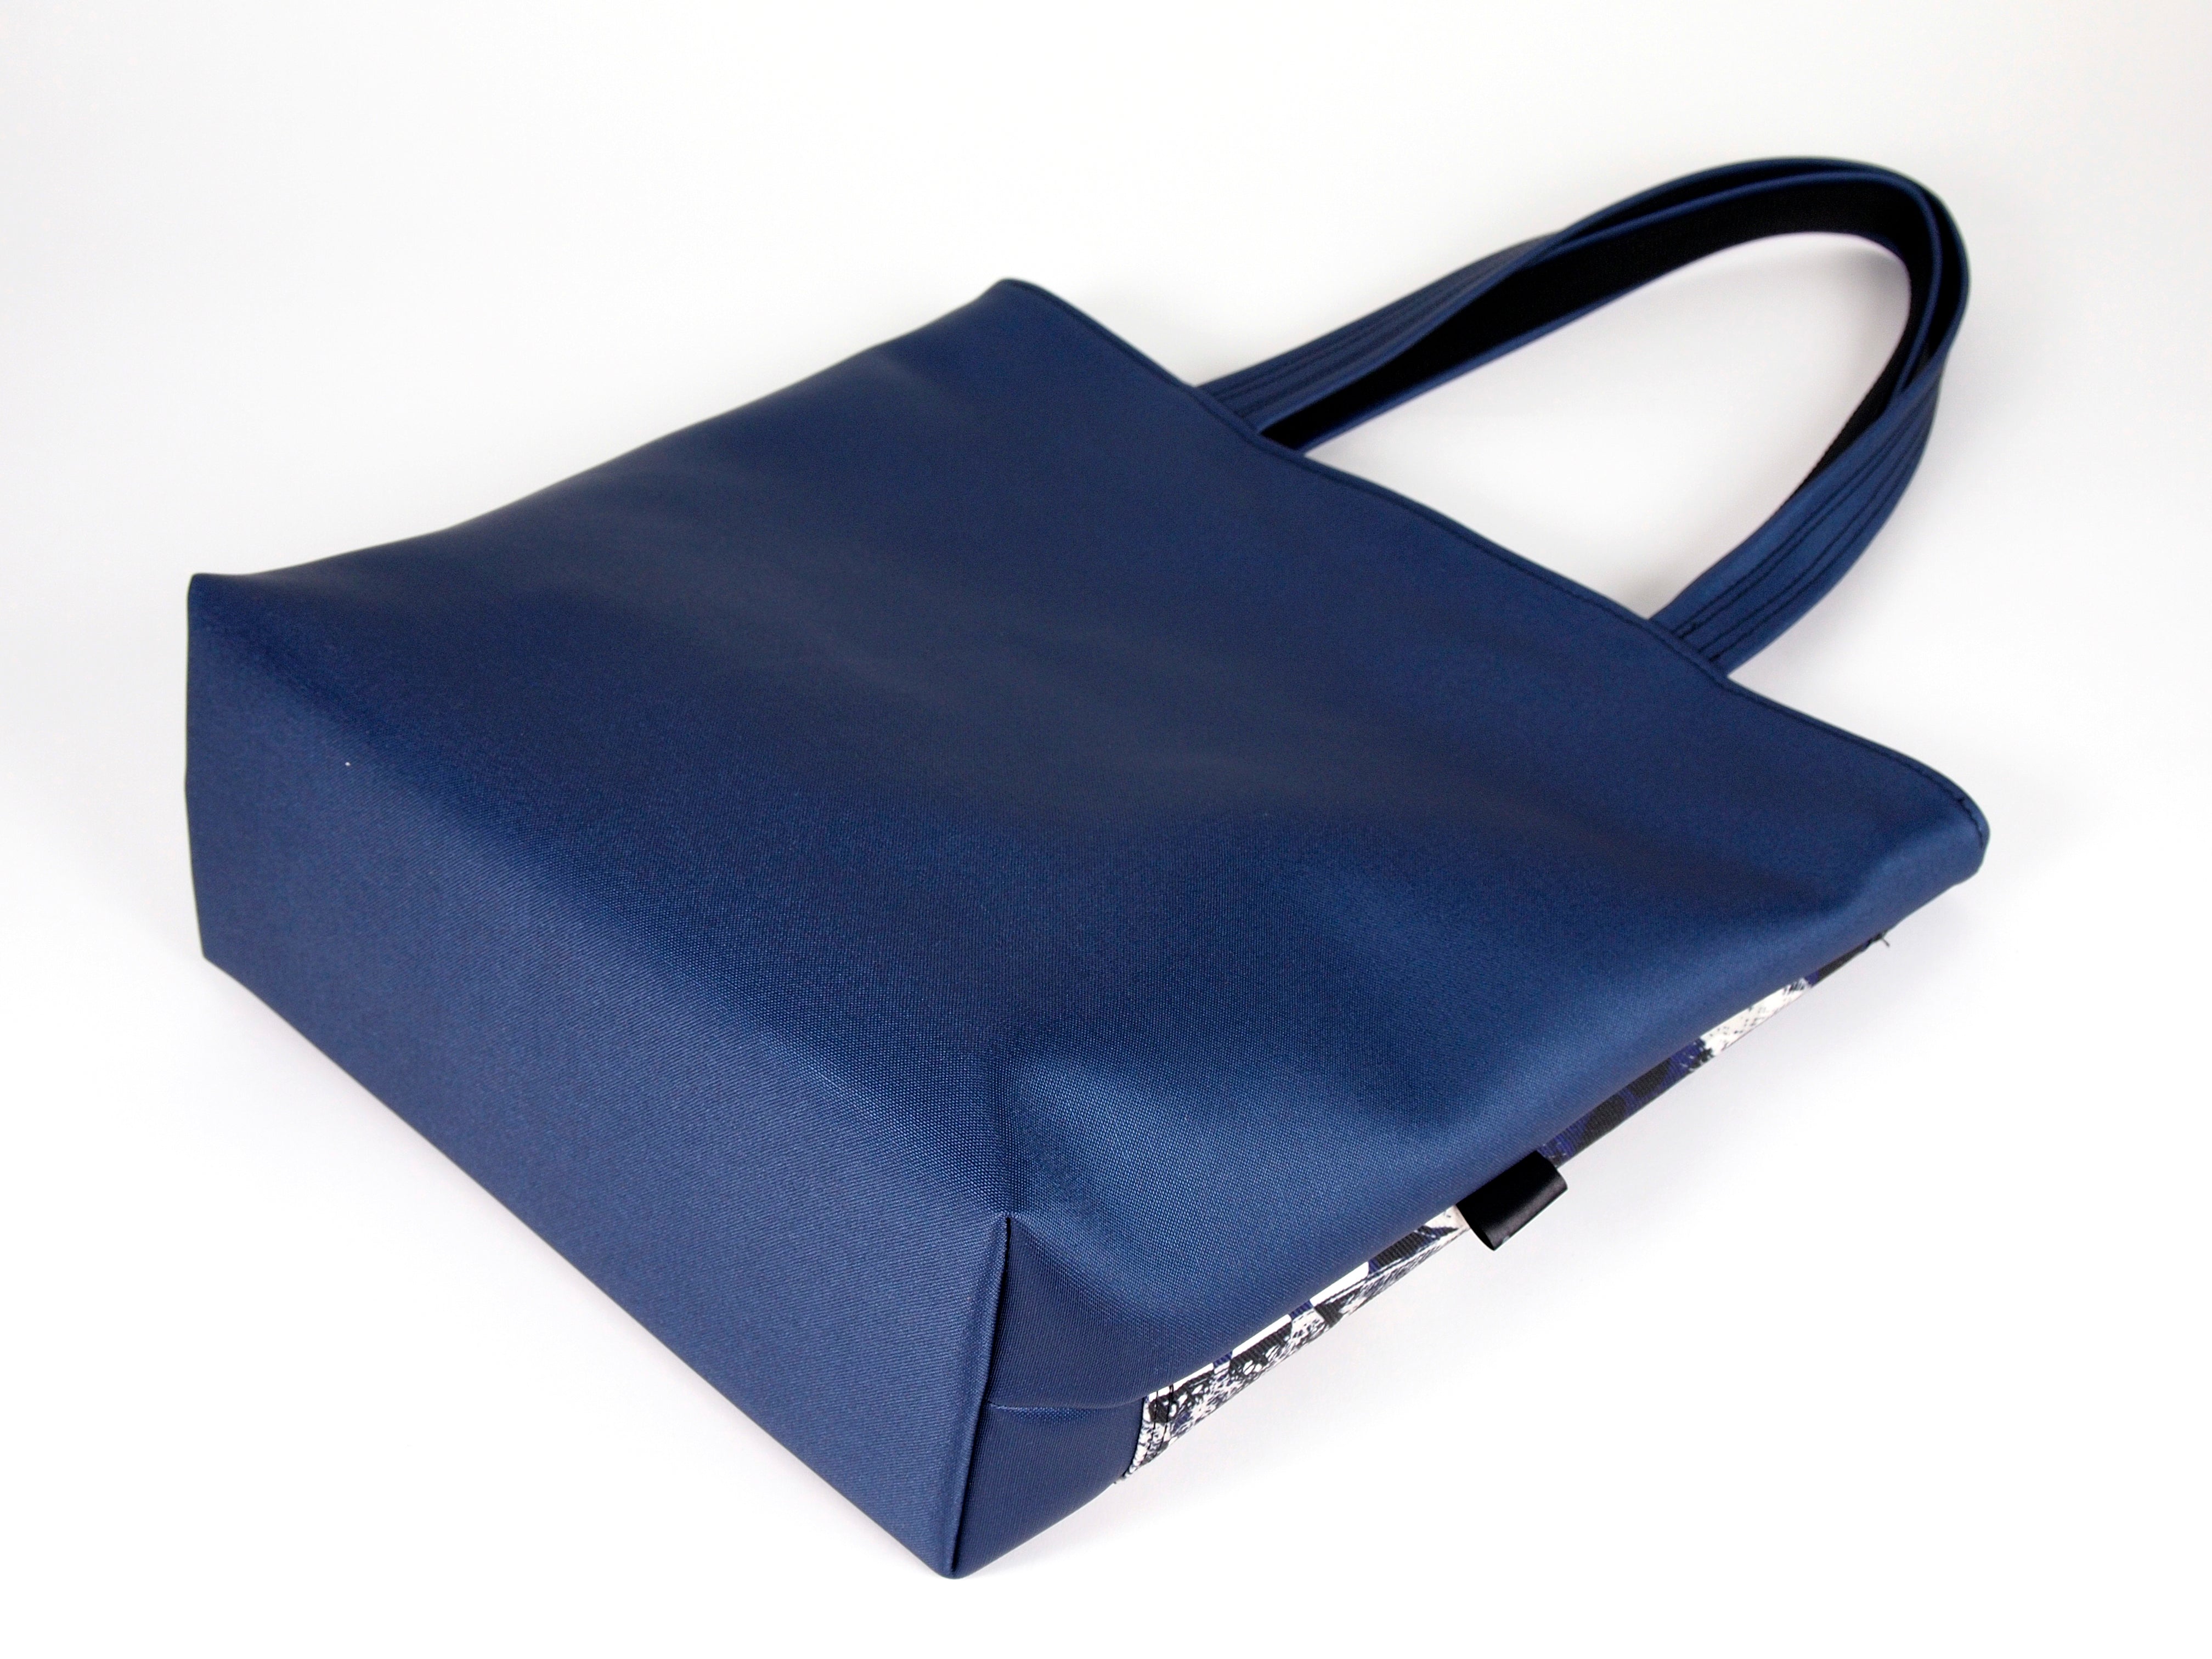 Bardo large tote bag - Blue dream winter - Premium large tote bag from Bardo bag - Just lvabstract, beige, black, dark blue, denim, dots, dream, floral, flower, forest, gift, handemade, large, tablet, tote bag, vegan leather, woman, work bag89.00! Shop now at BARDO ART WORKS